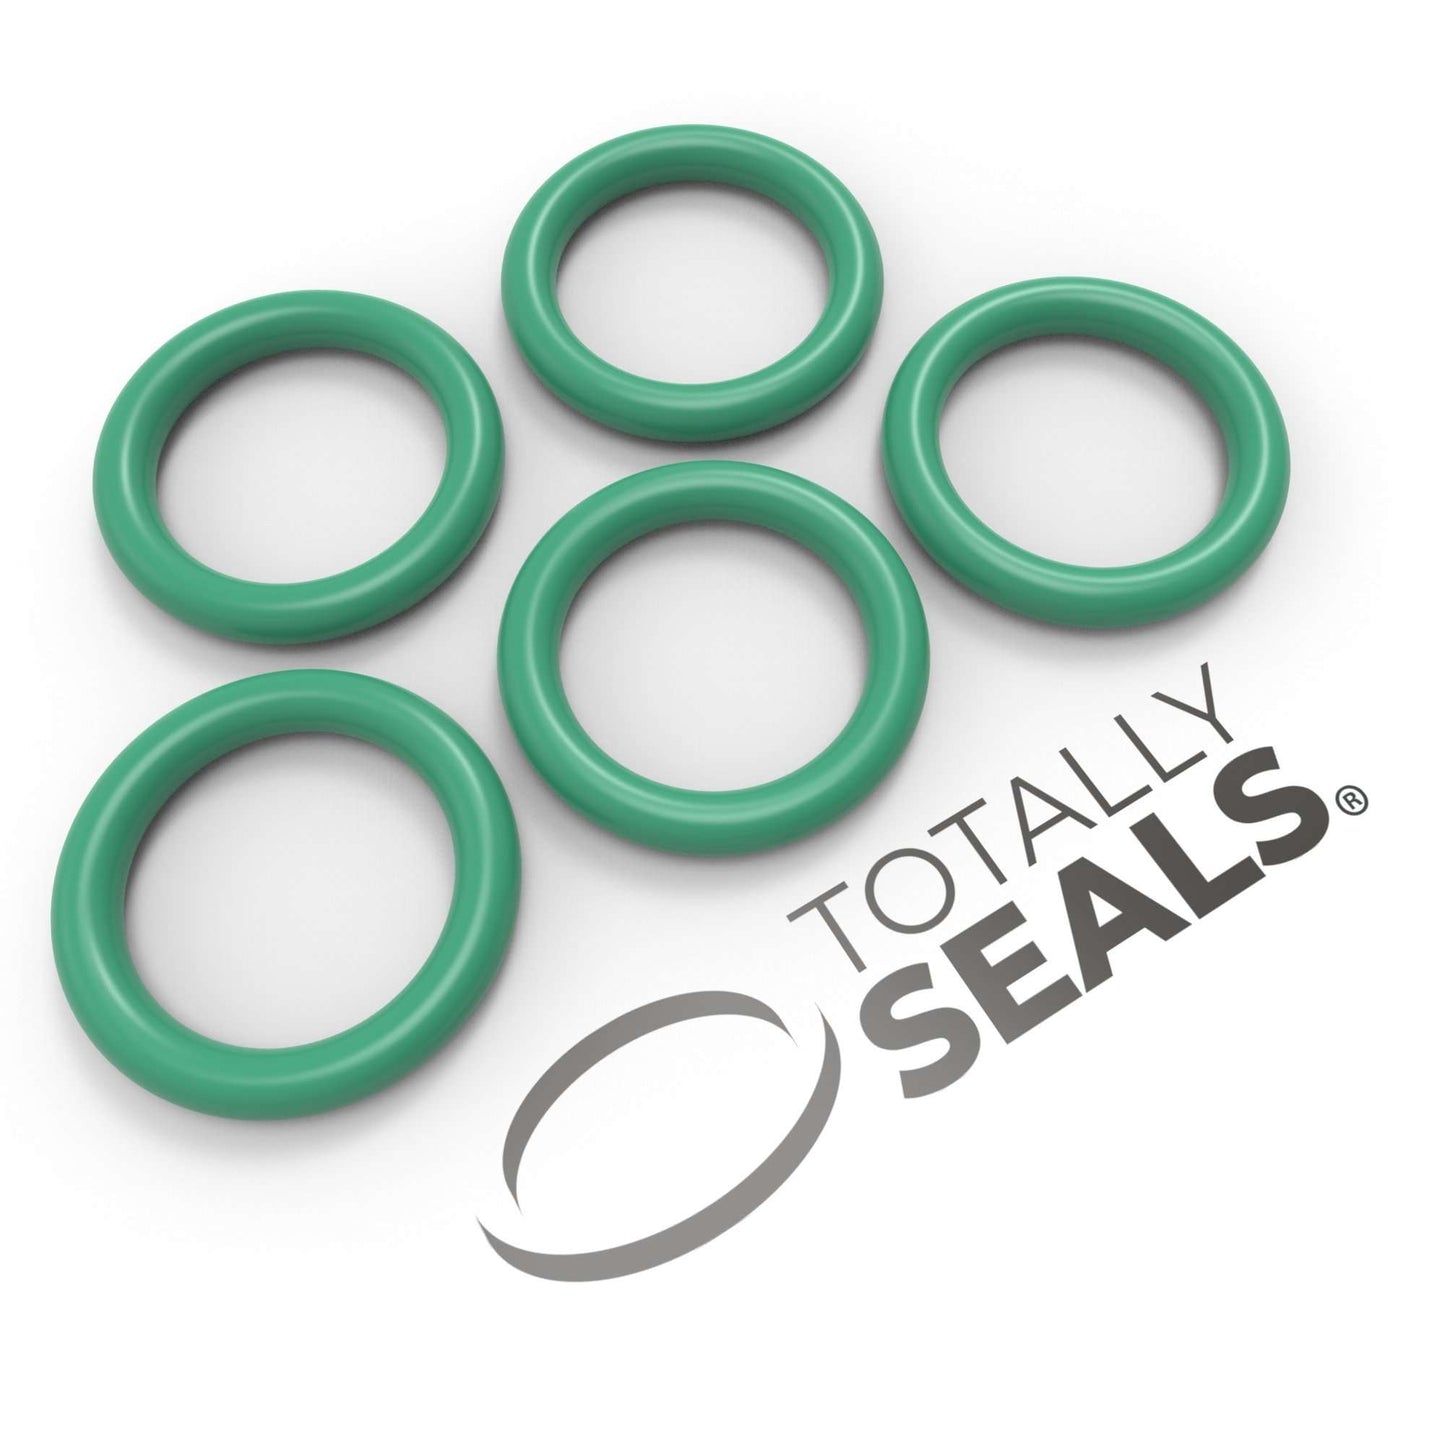 25mm x 2mm (29mm OD) FKM (Viton™) O-Rings - Totally Seals®